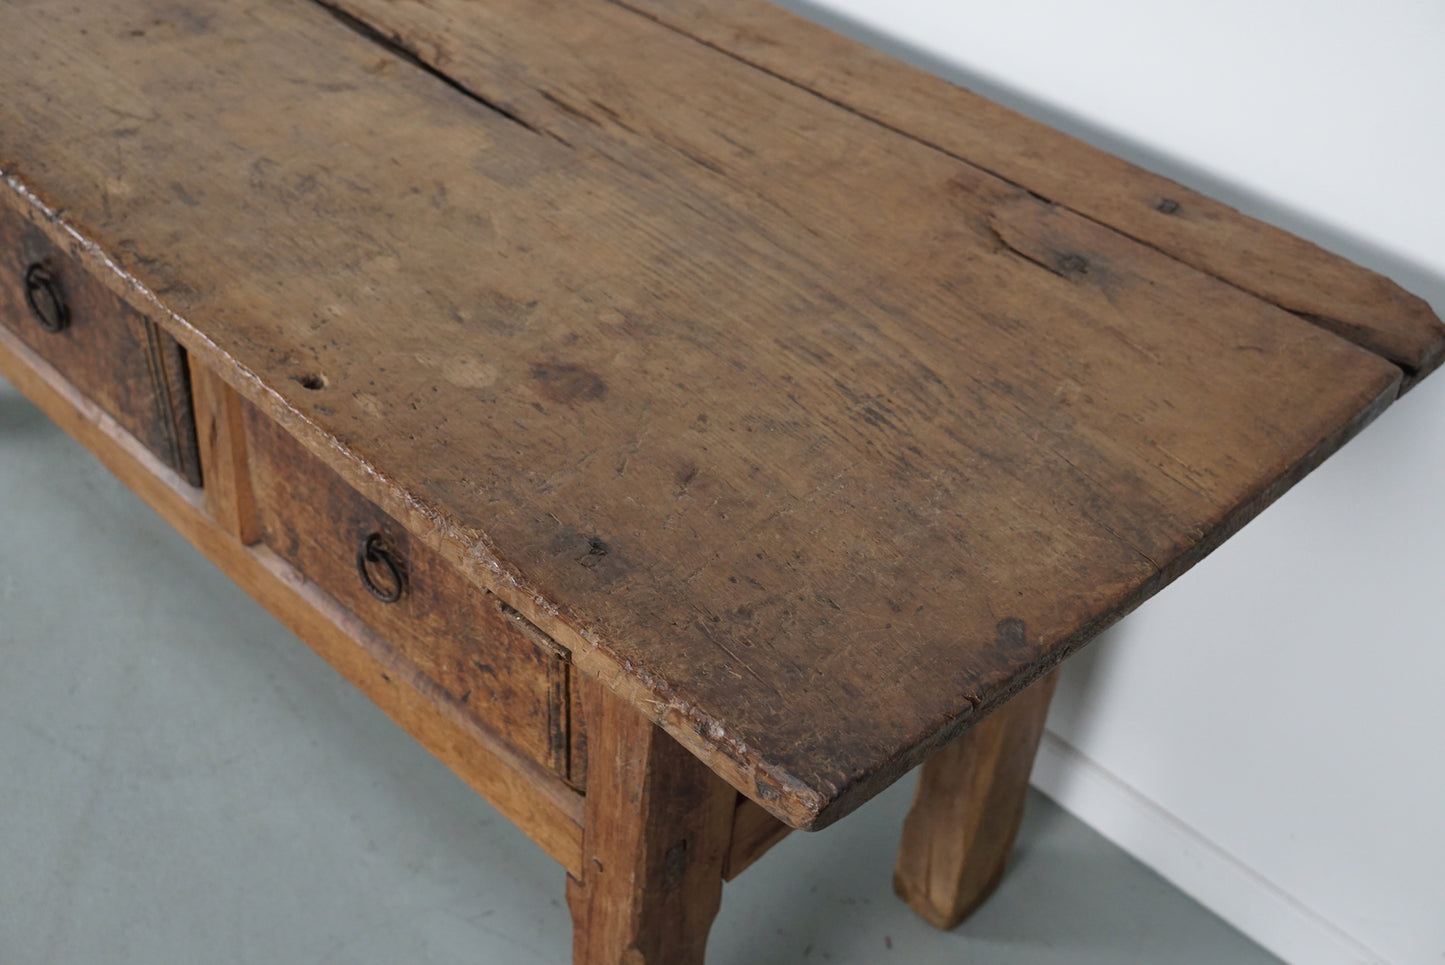 Antique Spanish Rustic Farmhouse Chestnut Side Table / Console, 18th Century